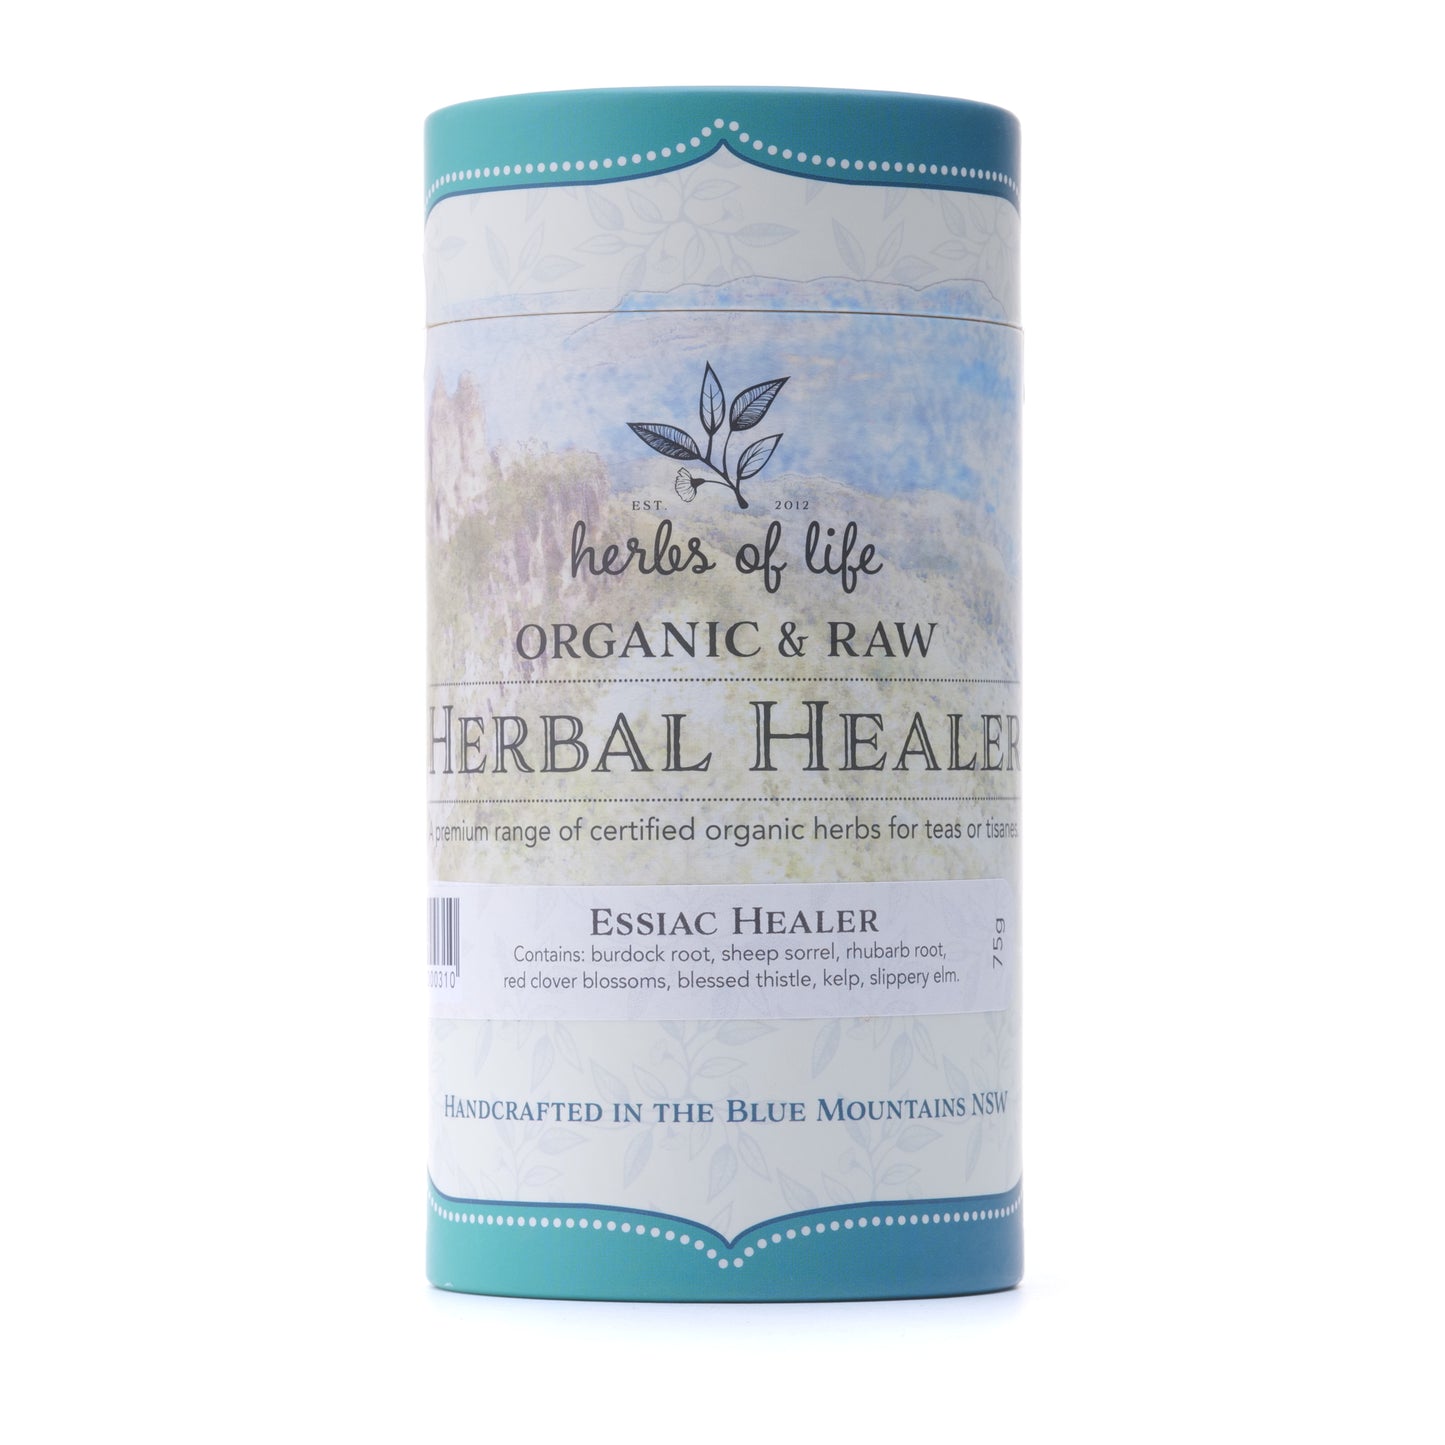 Herbal Healer - Essiac Healer